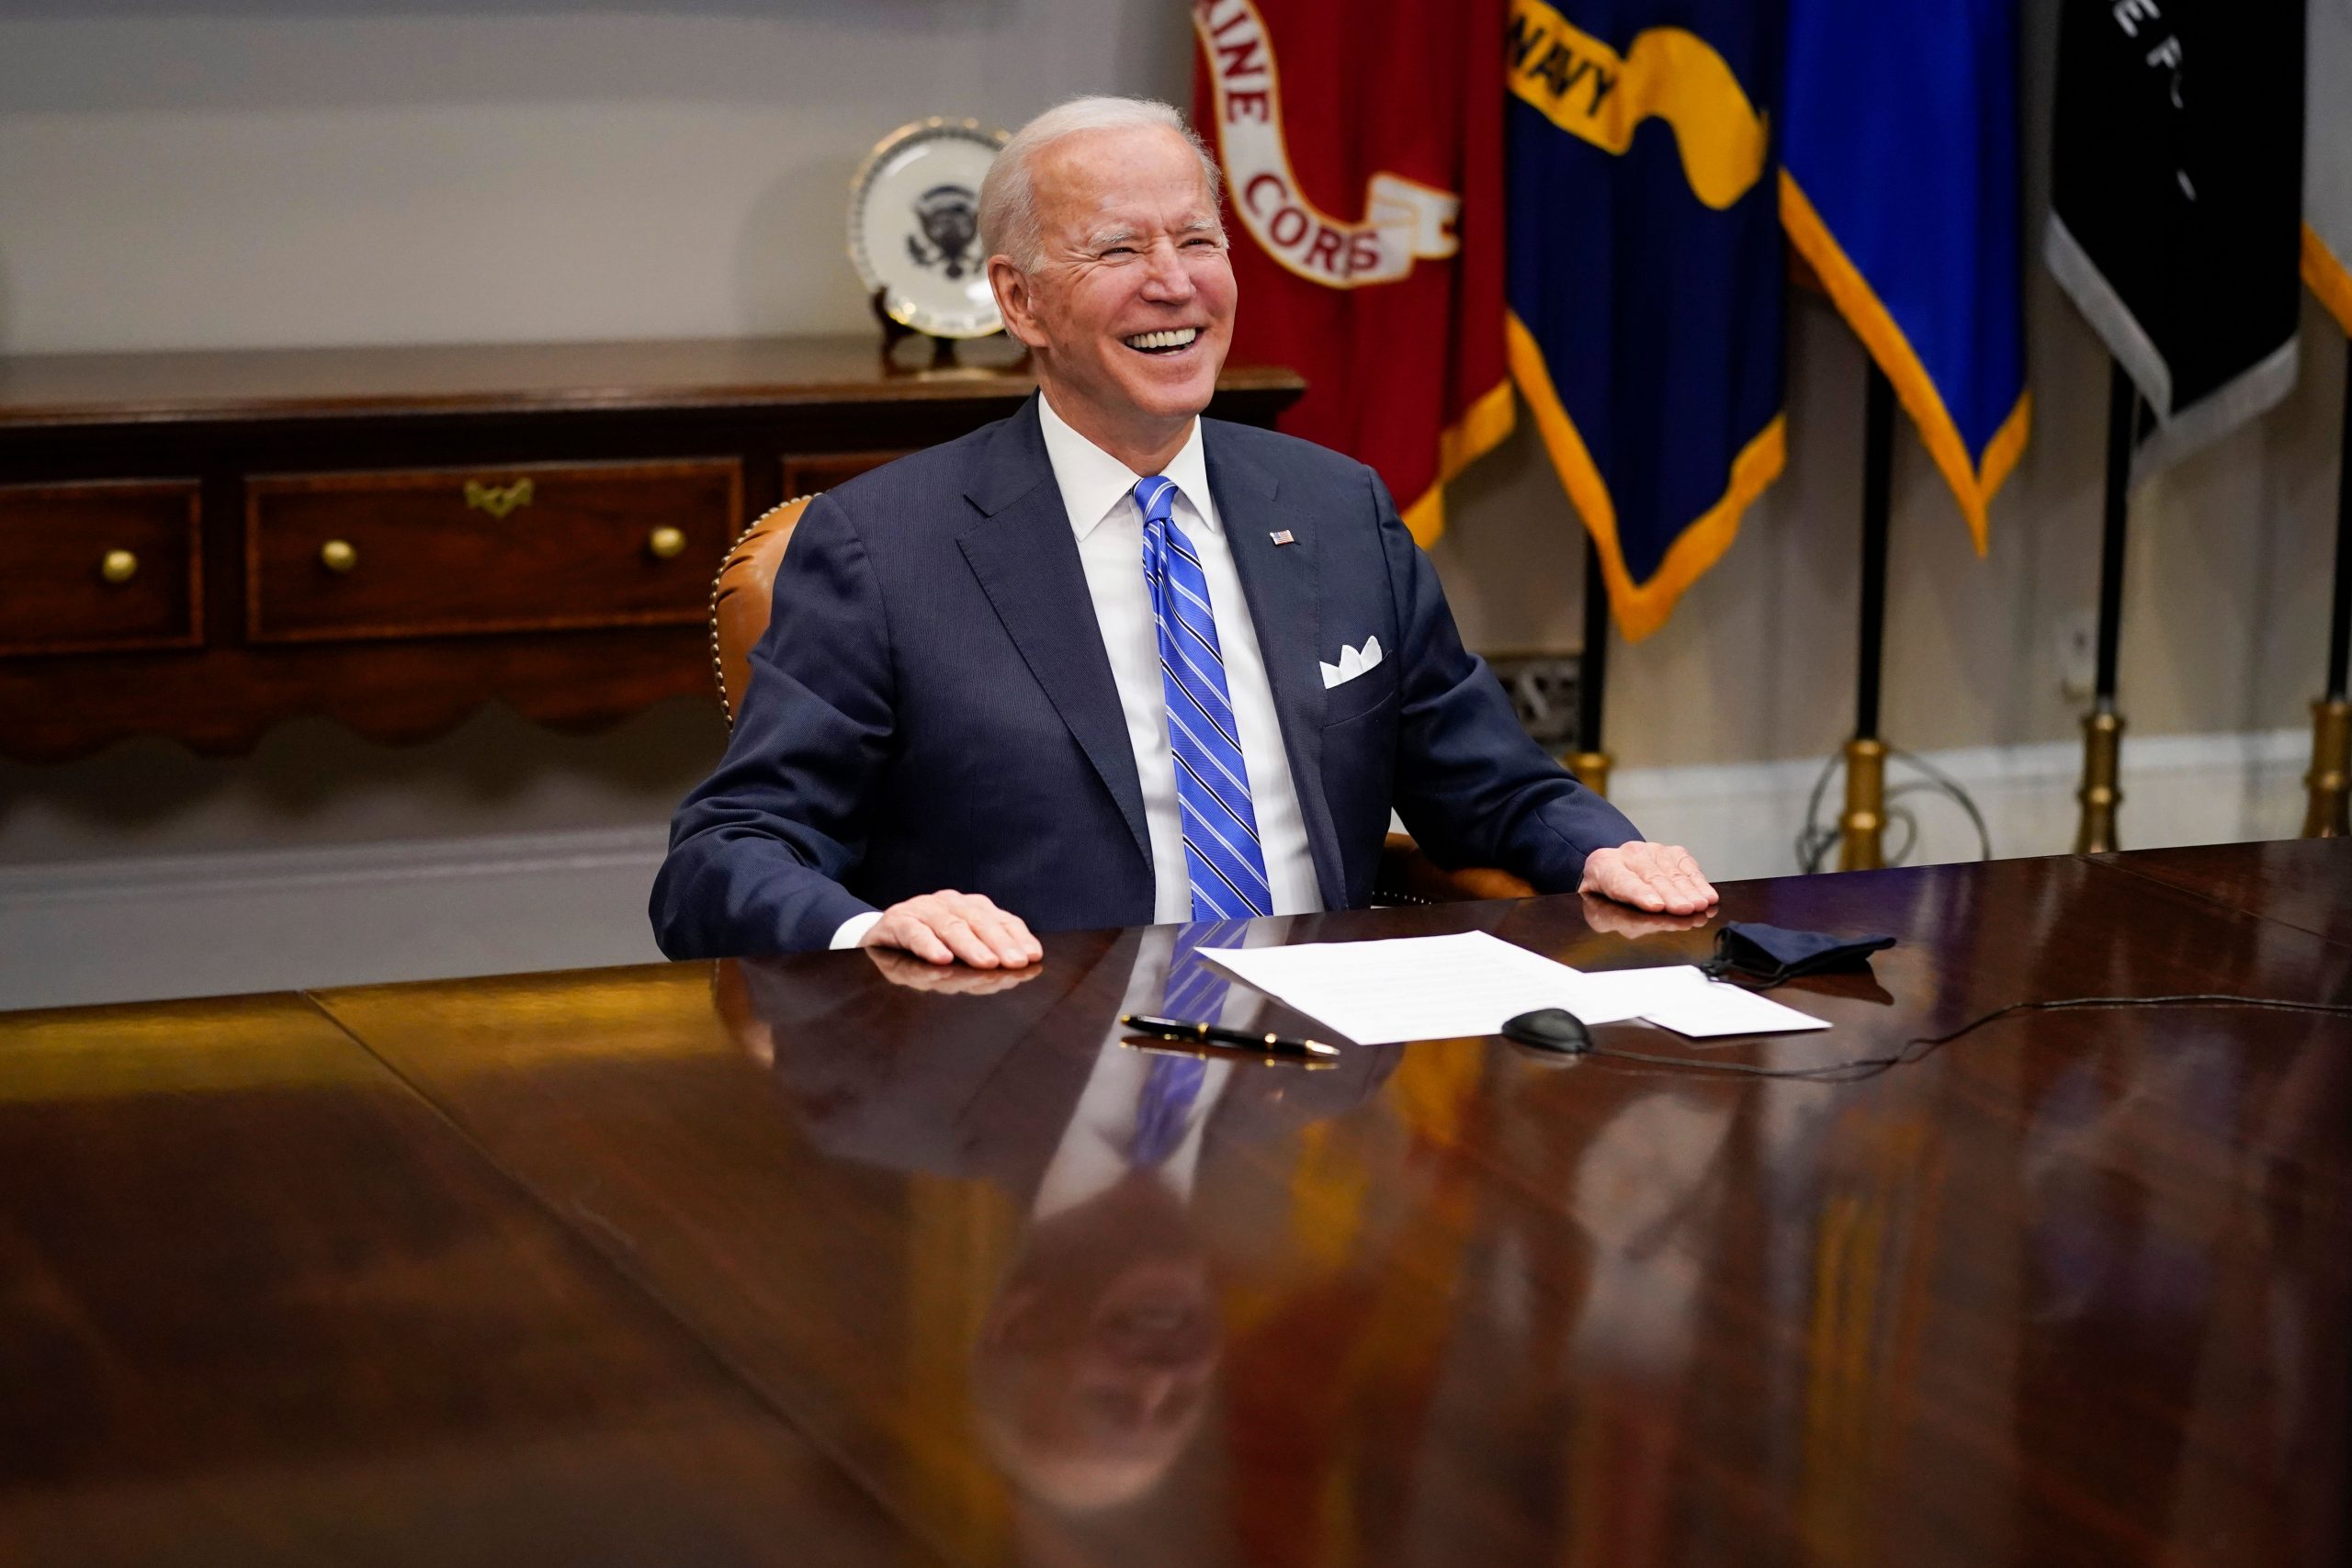 Cancer Moonshot: Joe Biden’s health care initiative with a reboot